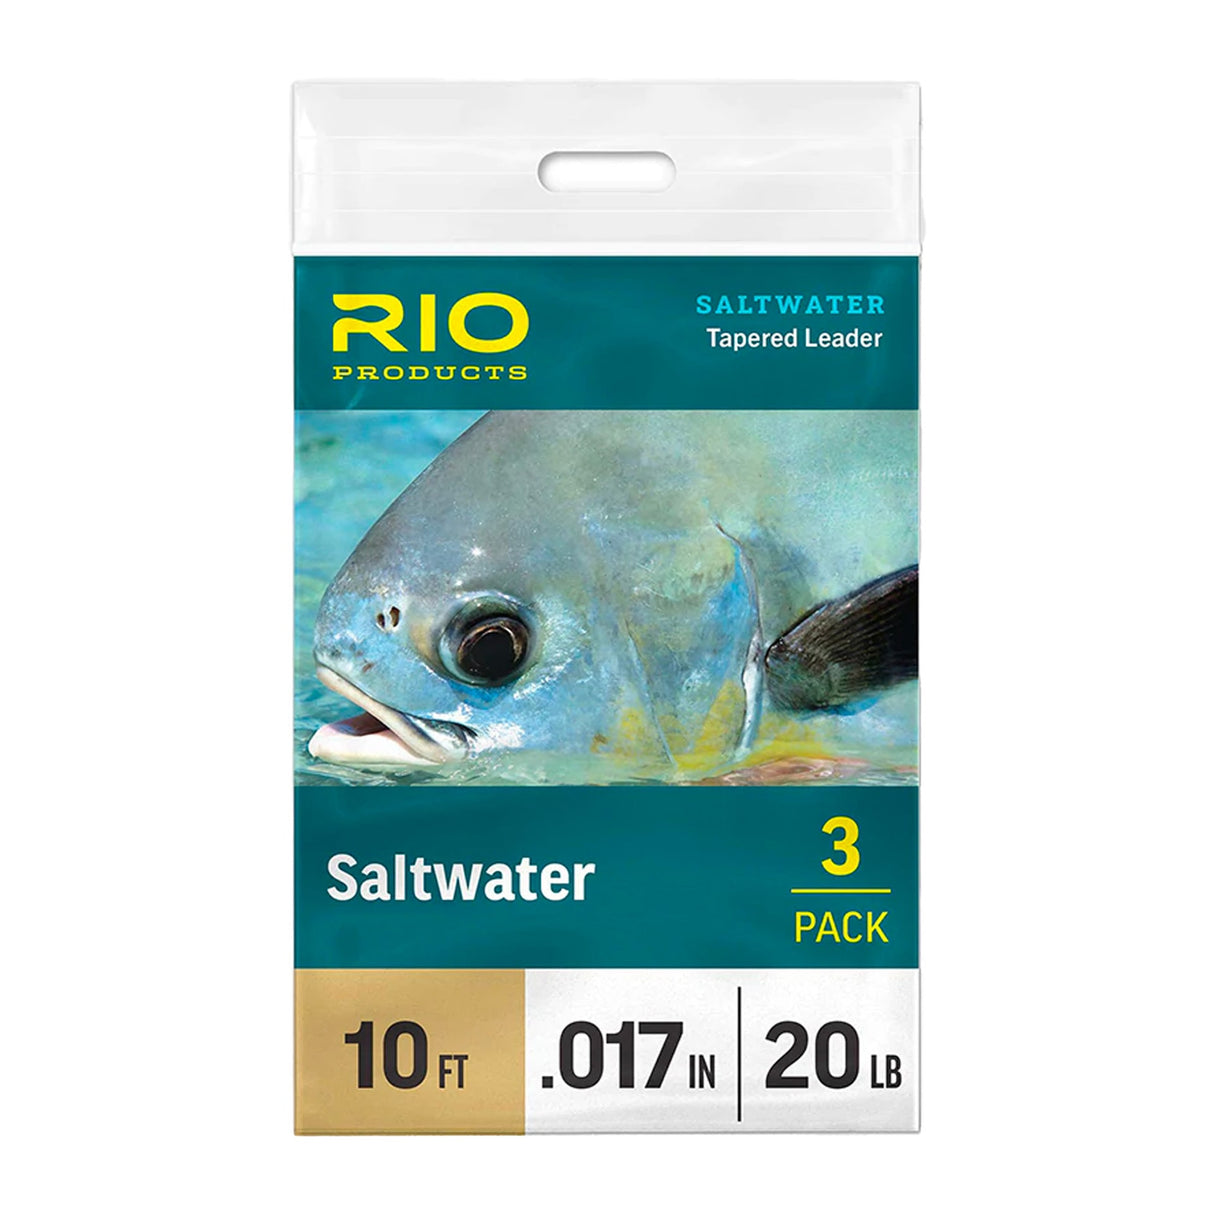 RIO SALTWATER LEADER 10 FT 16 LB 3 PACK